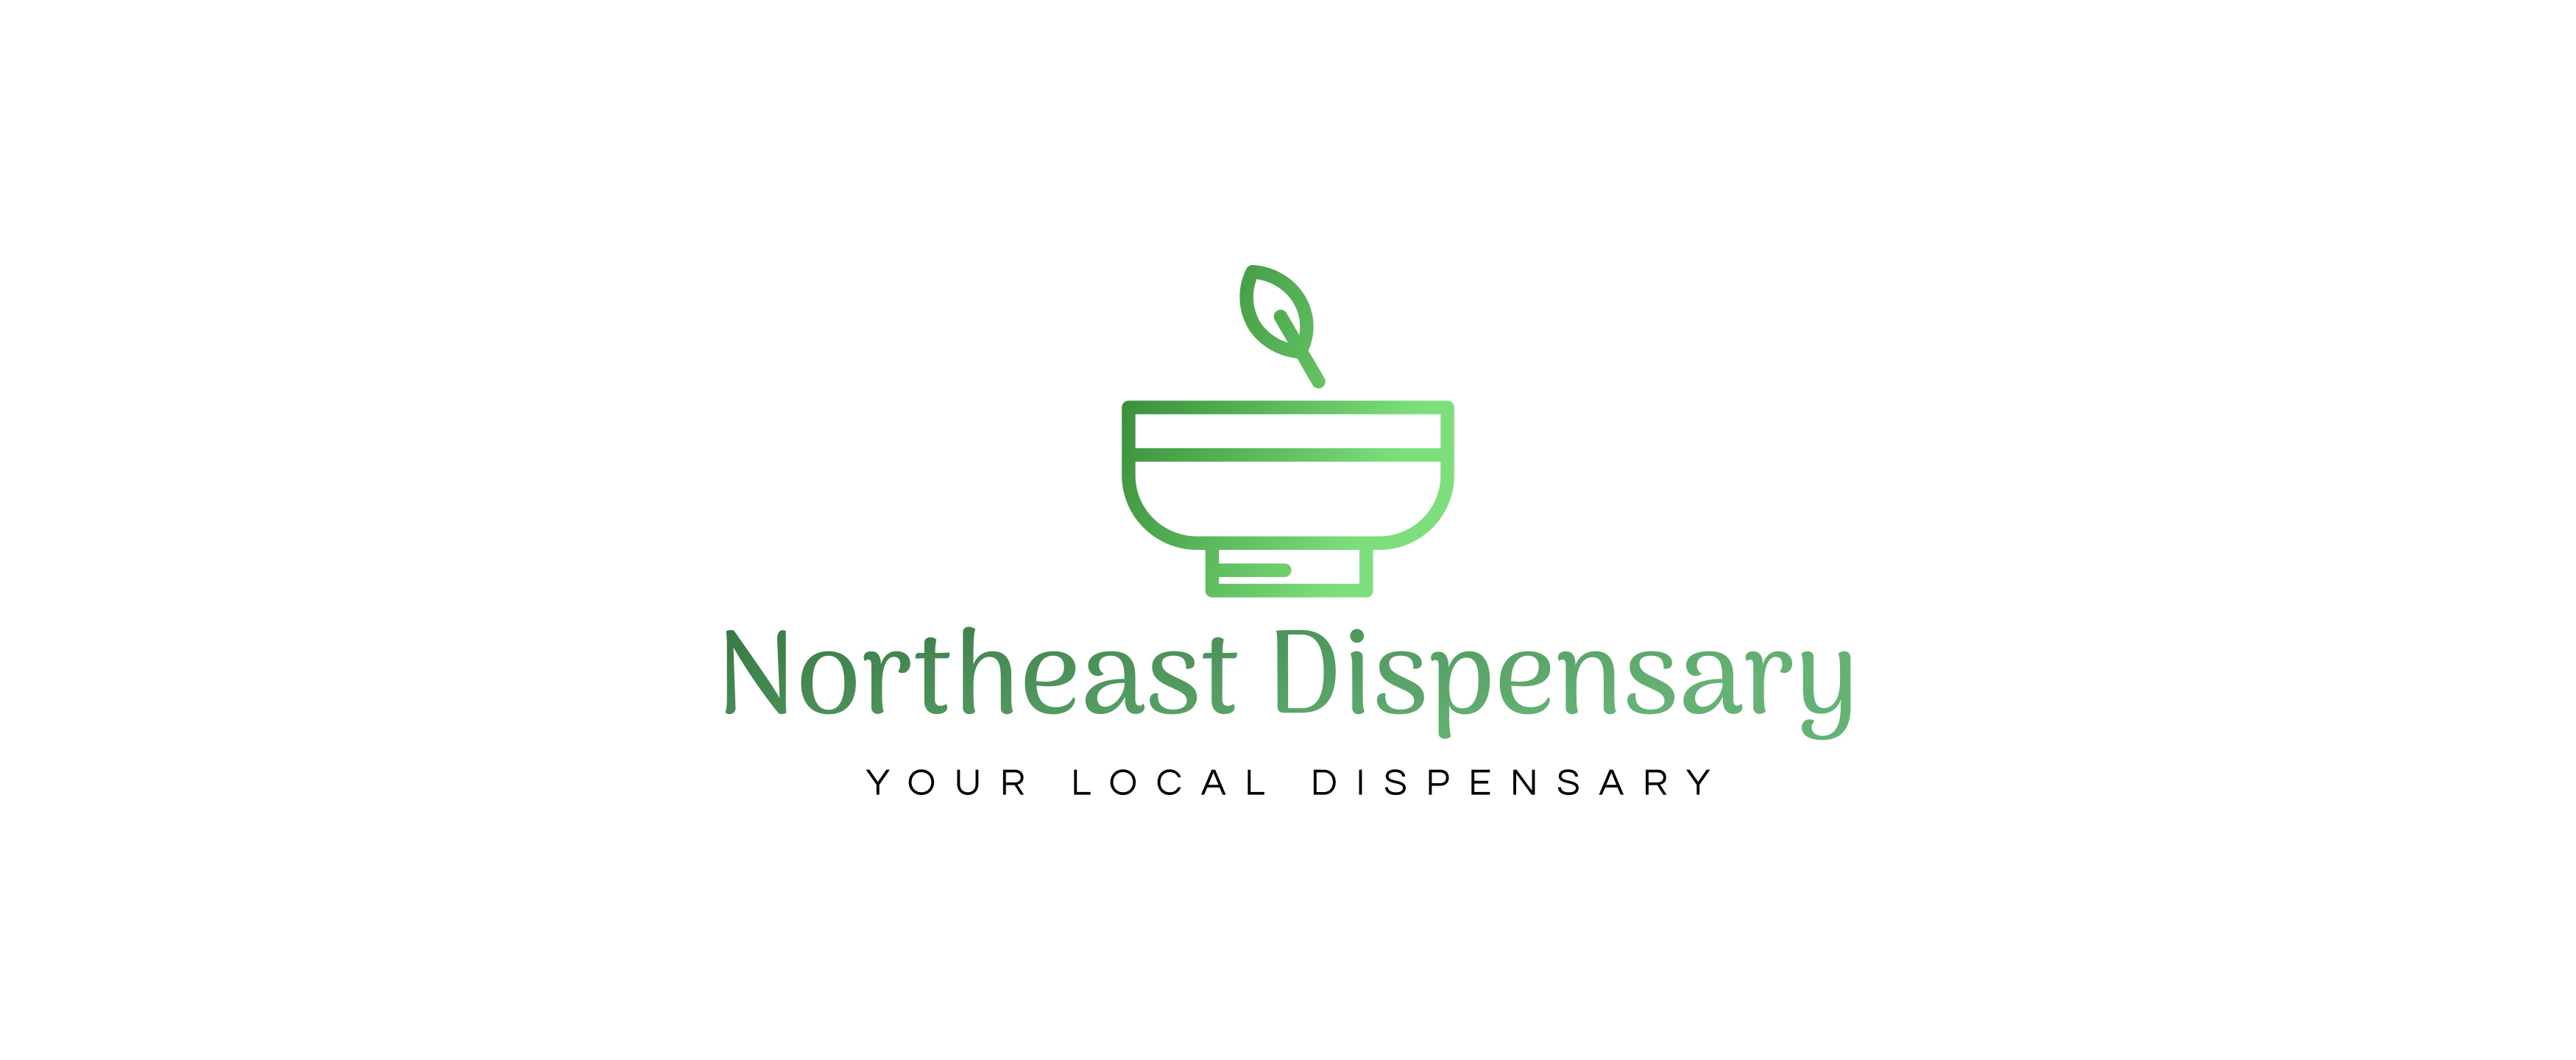 Northeast Dispensary